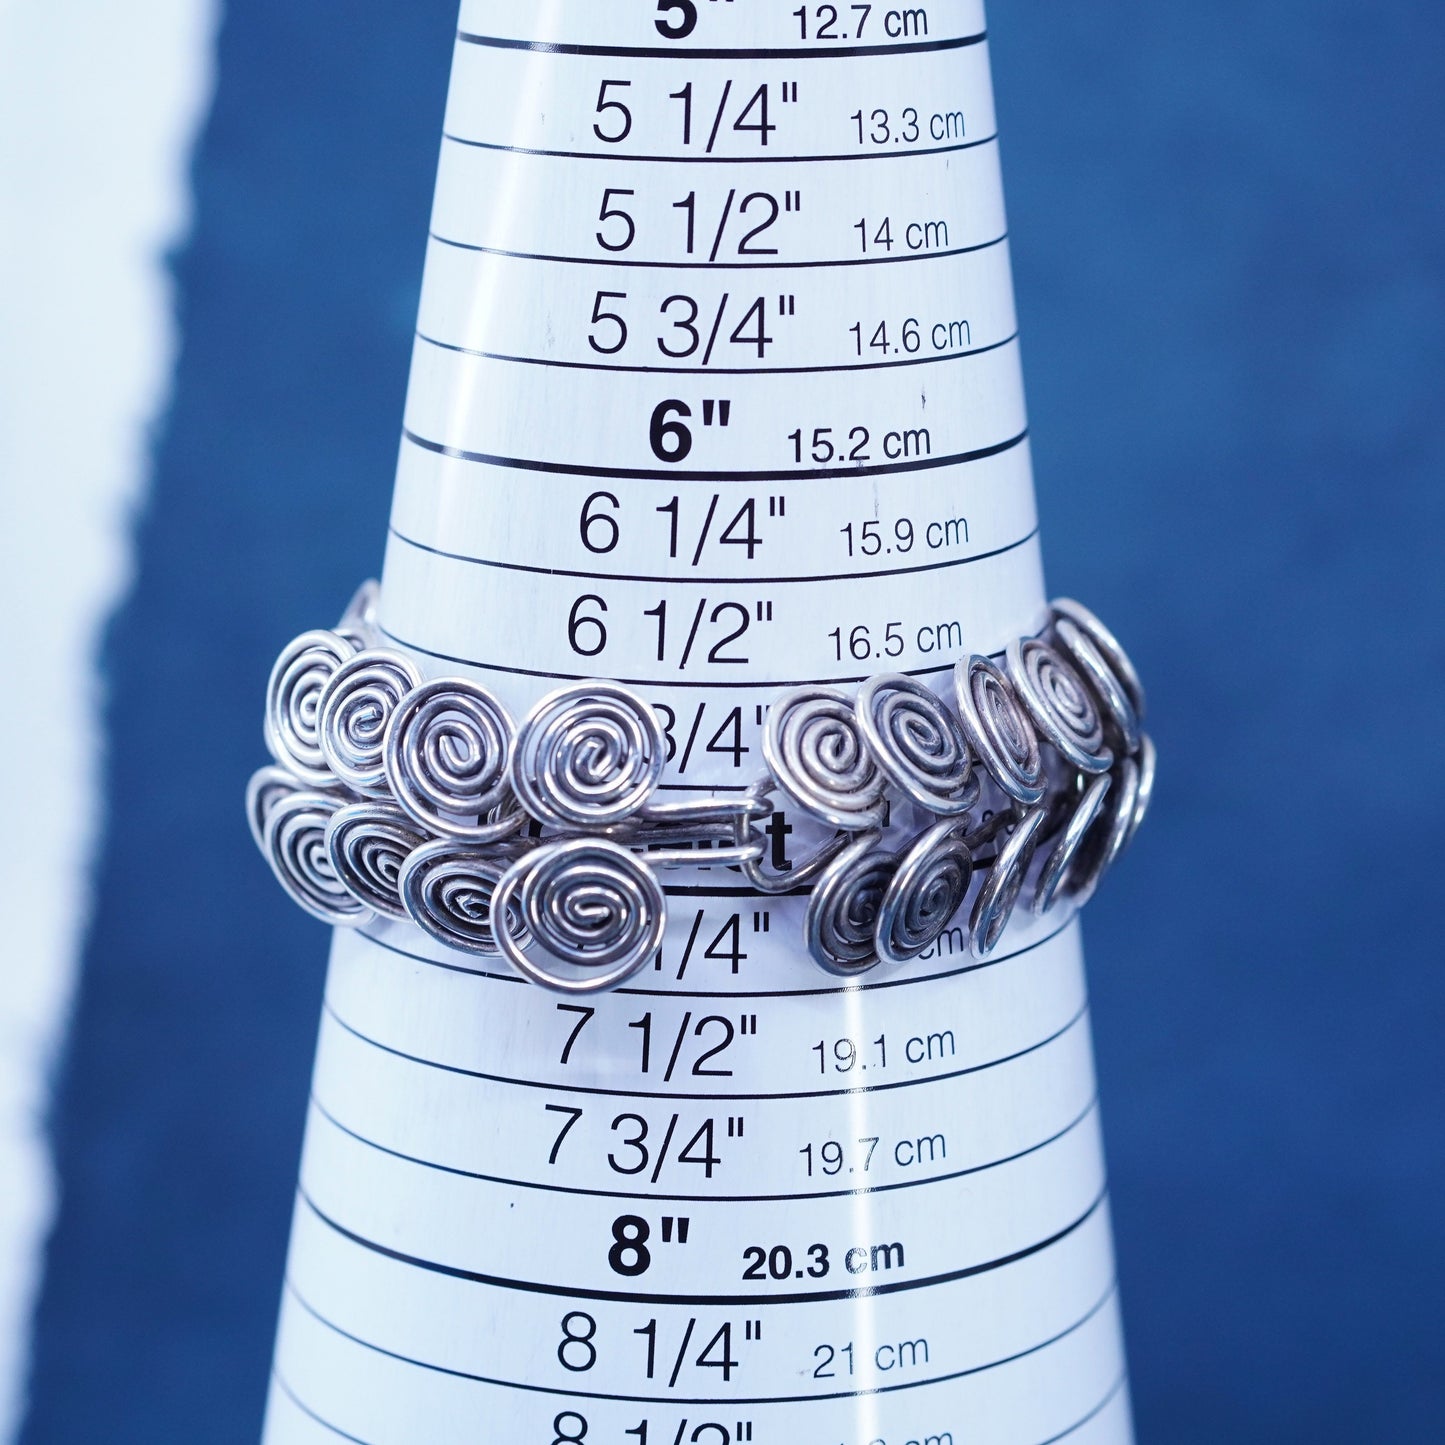 7”, vintage sterling silver handmade bracelet, 925 swirly link chain